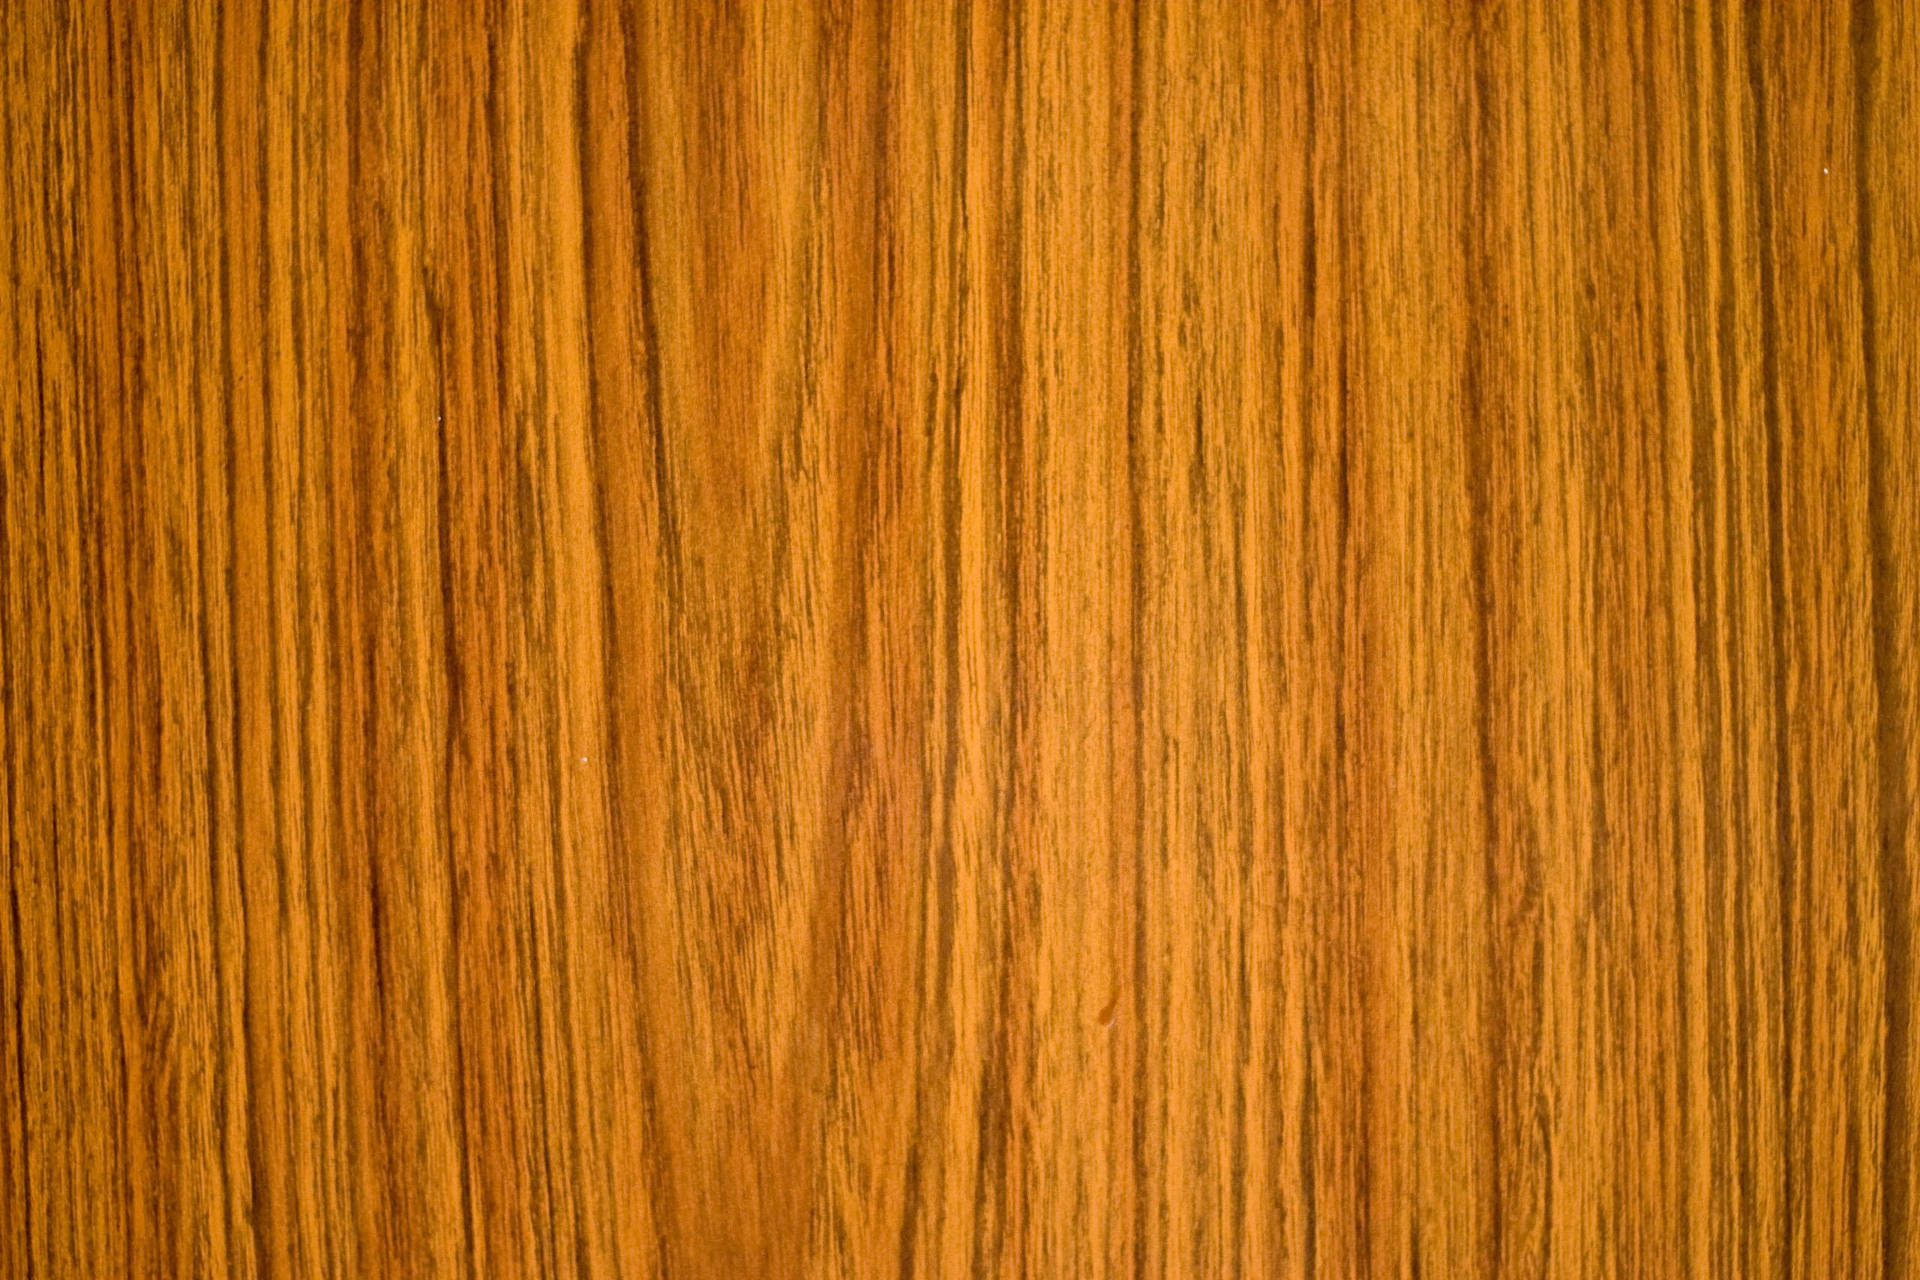 Teak Wood Texture Background